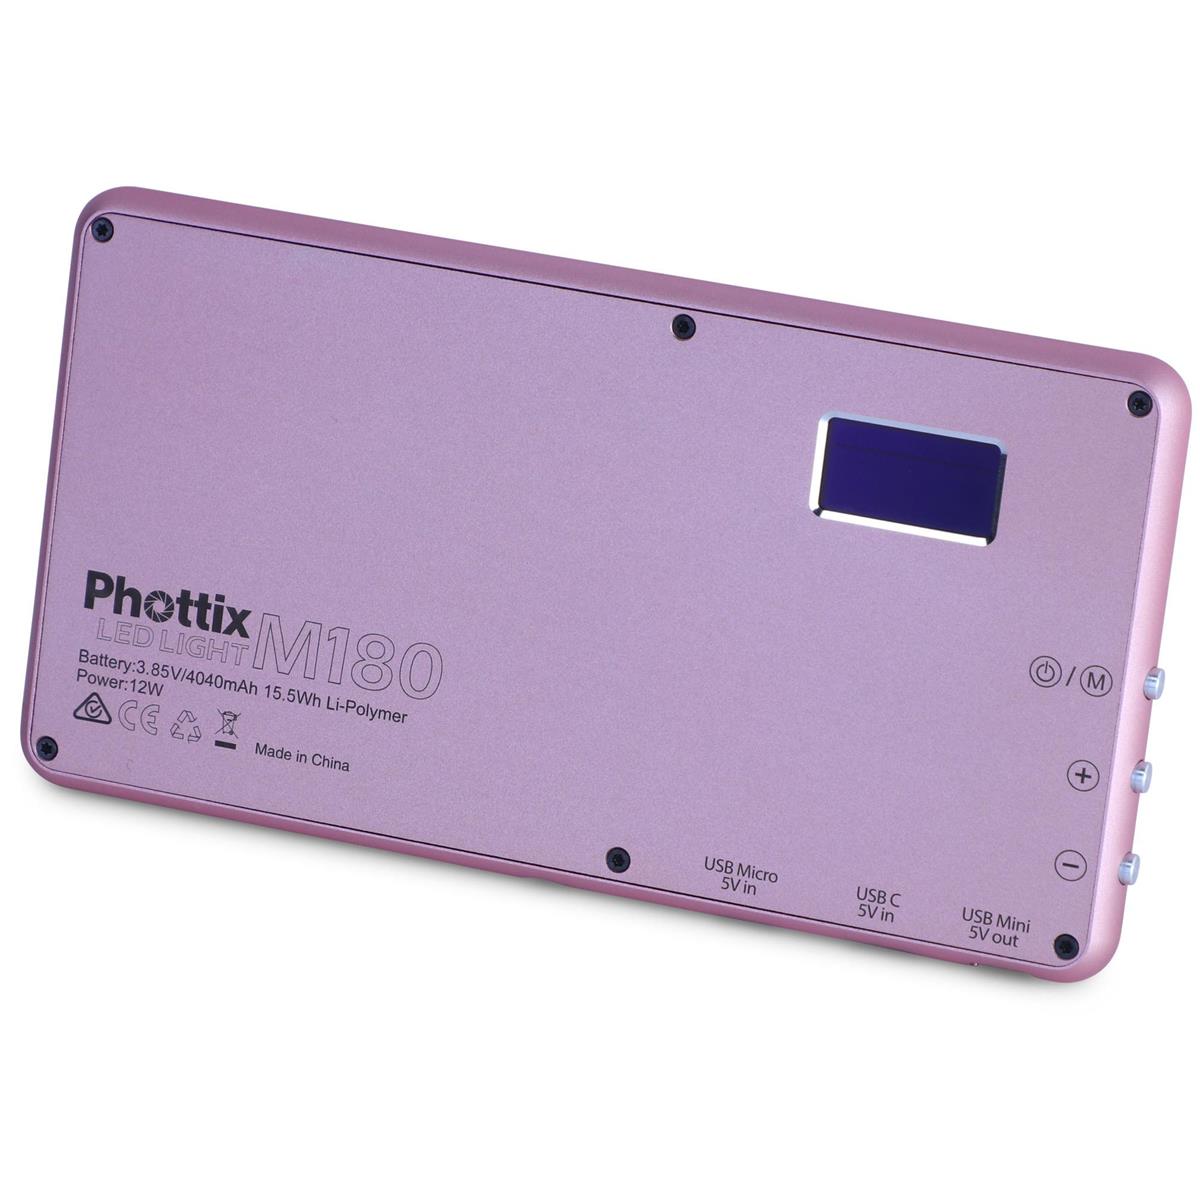 Phottix M180 Bicolor LED Panel and Power Bank (Rose Gold)